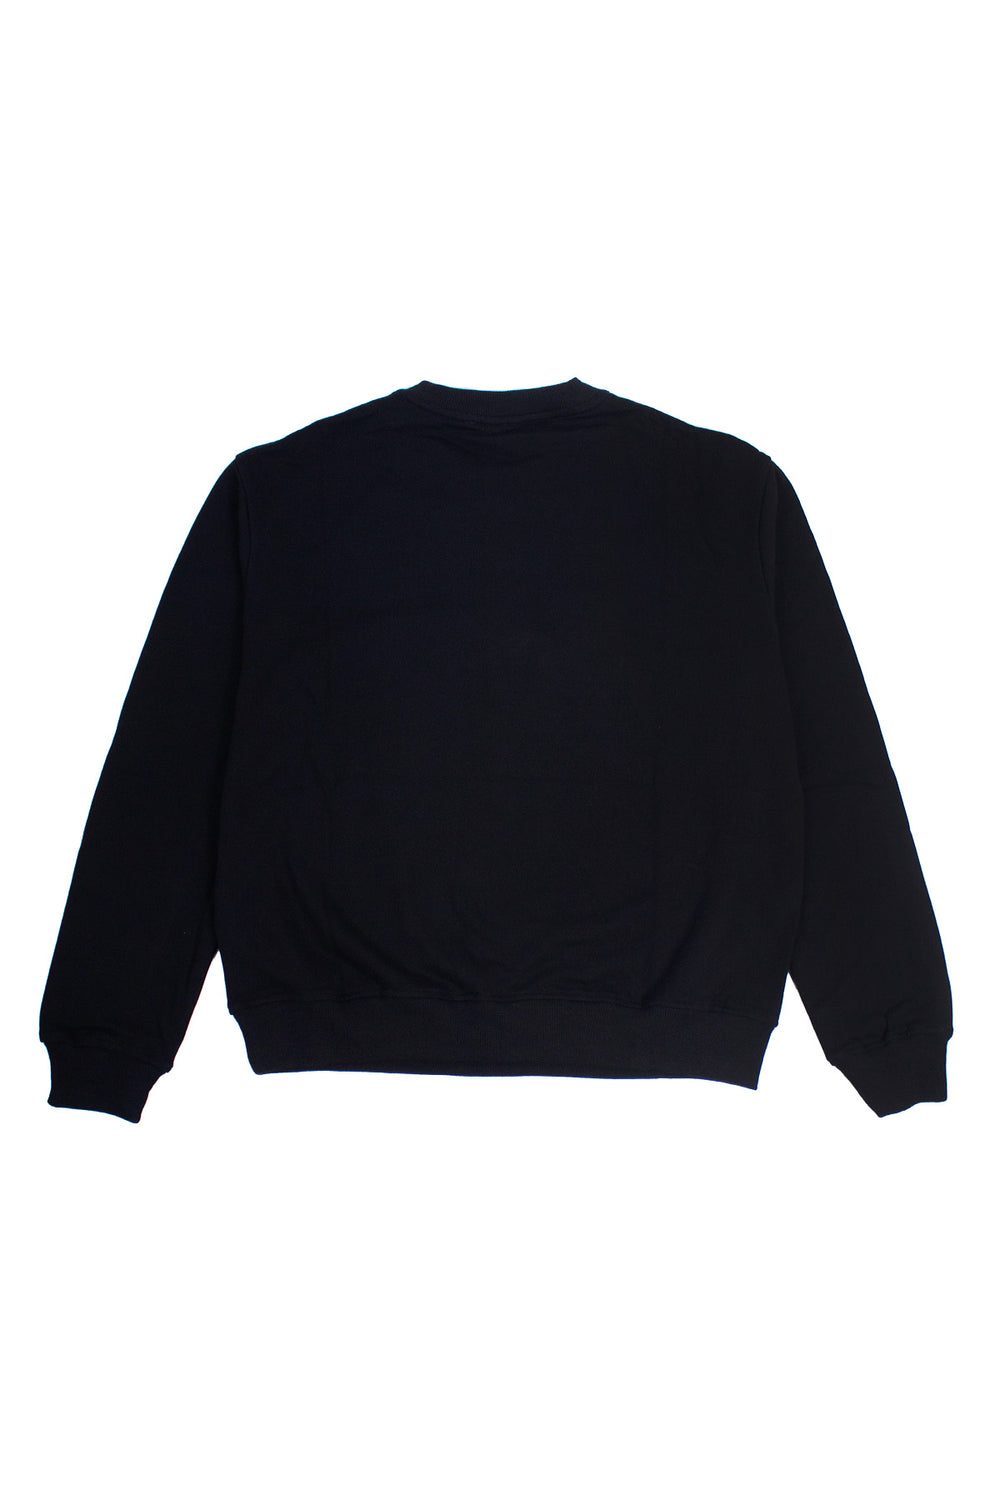 PMC | Prime Statement Crewneck Sweater Black